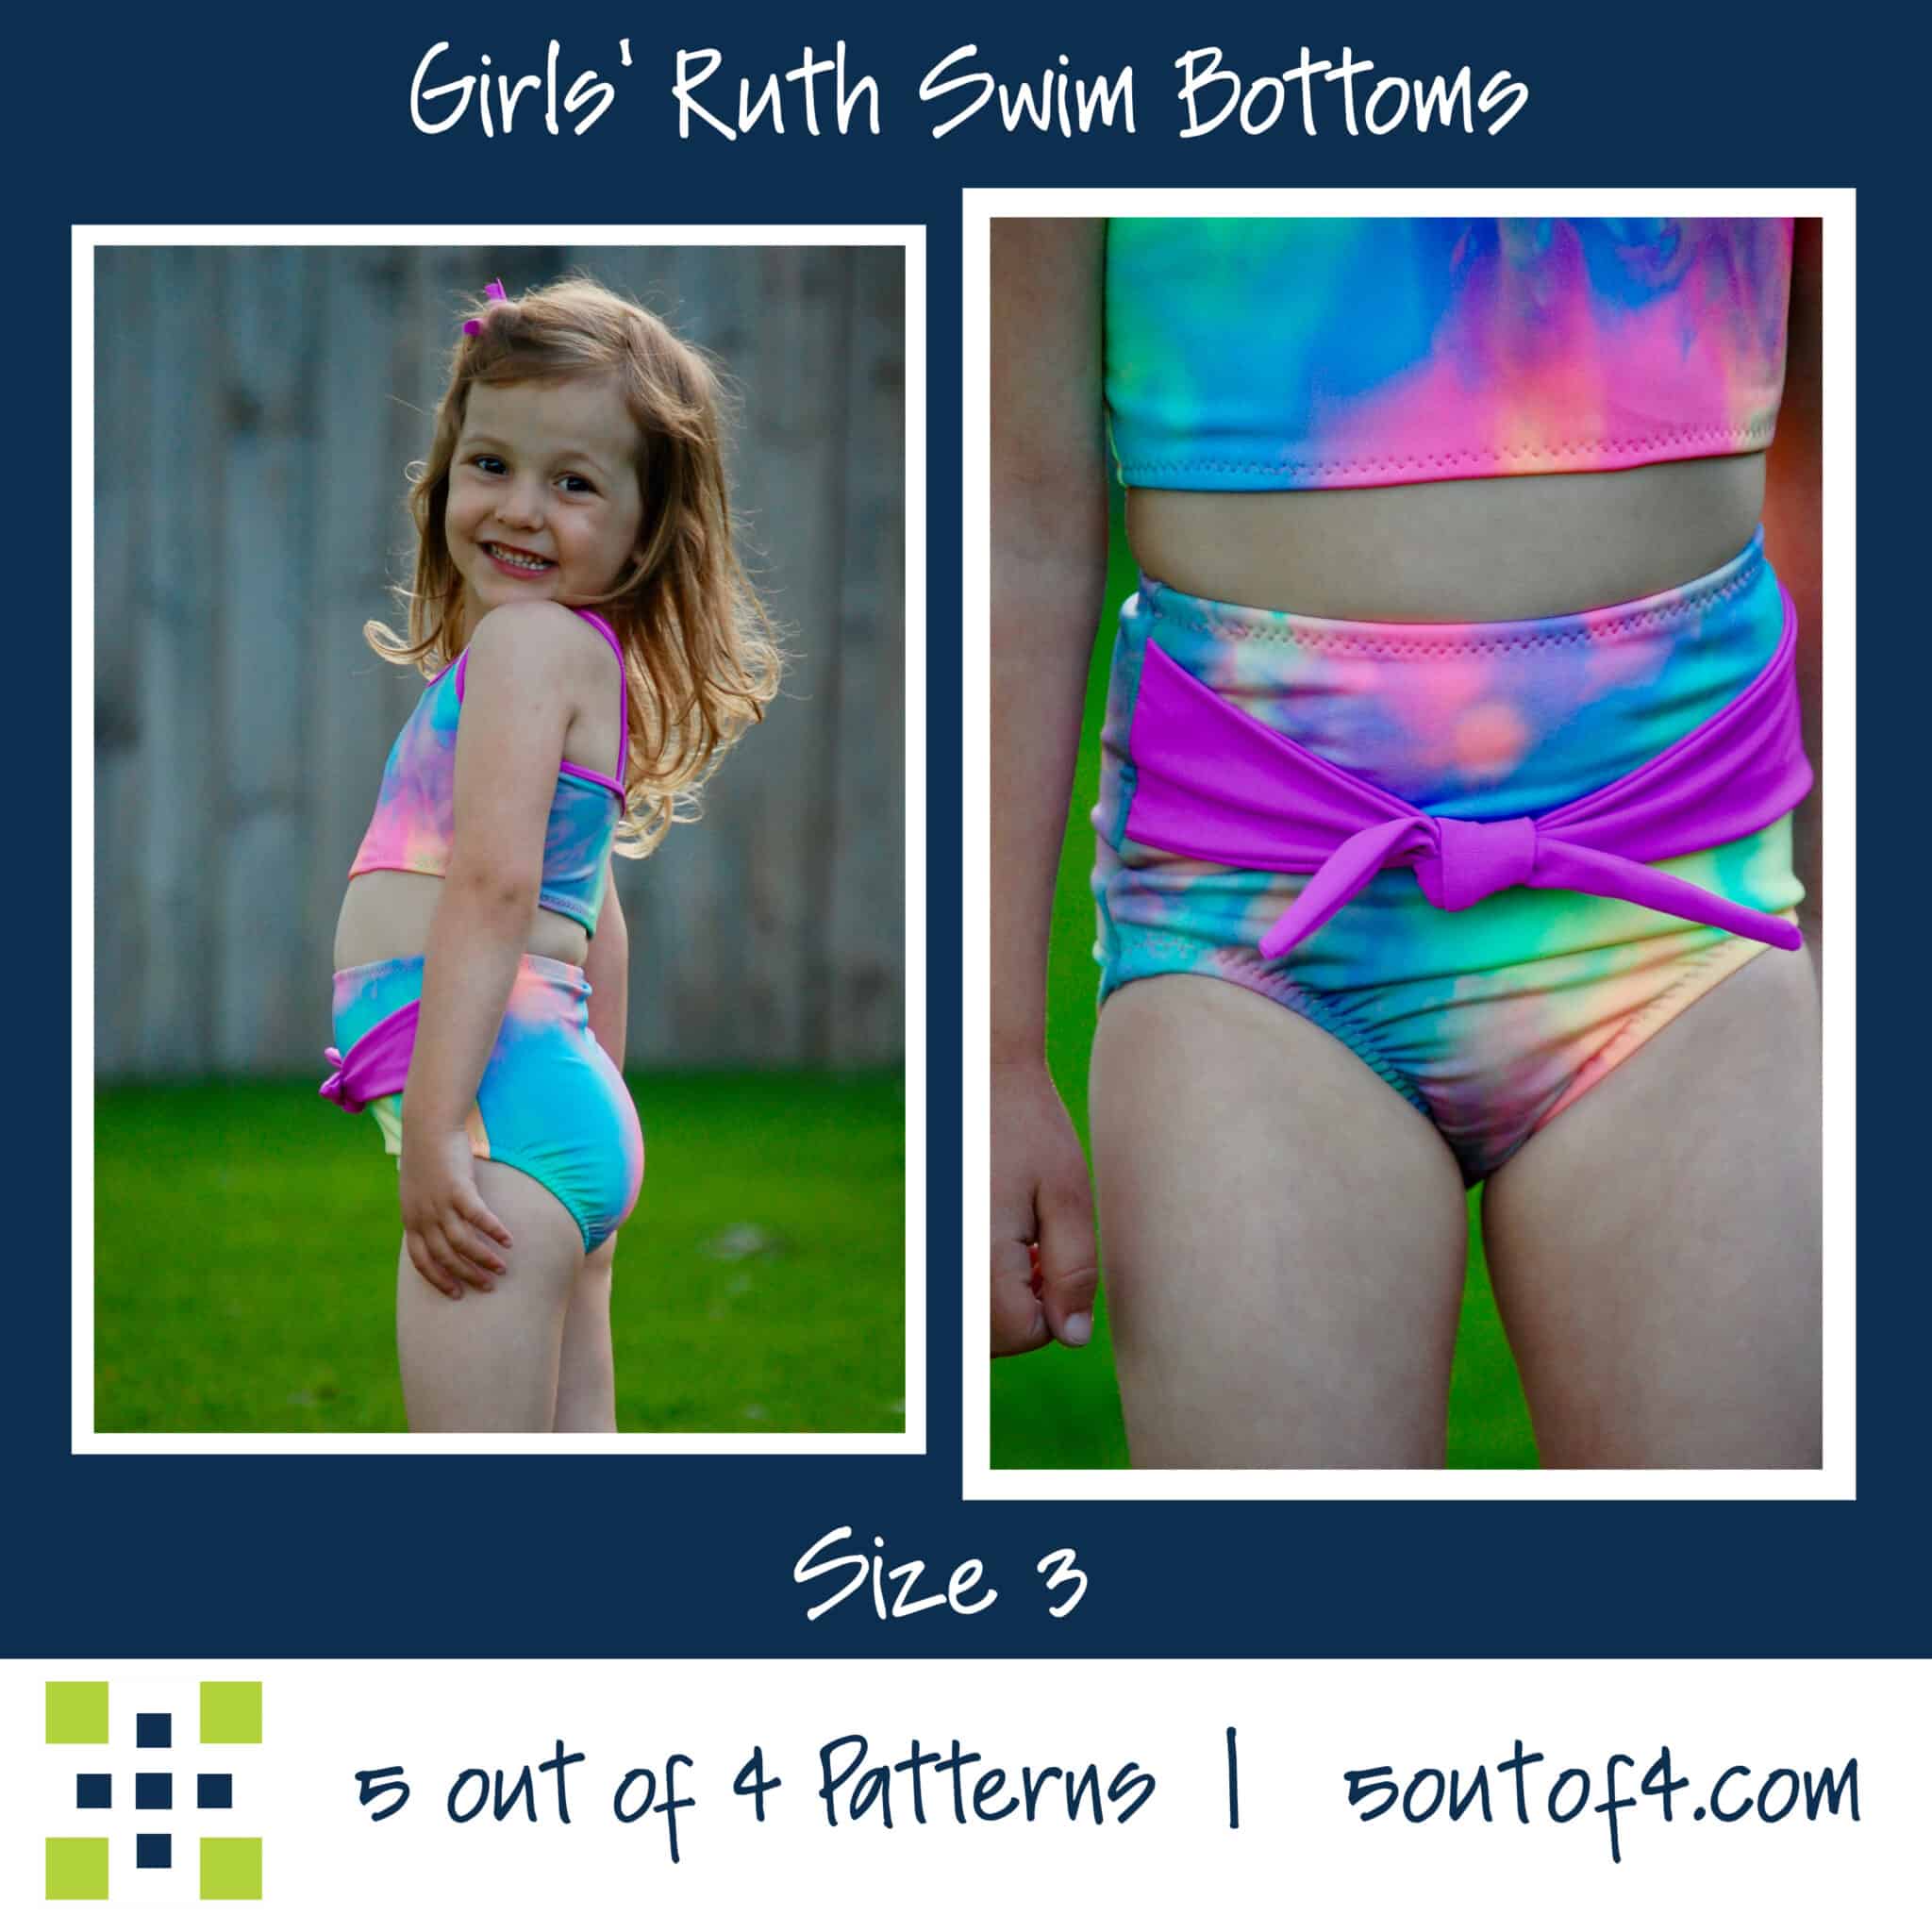 Kids' Ruth Swim Bottoms